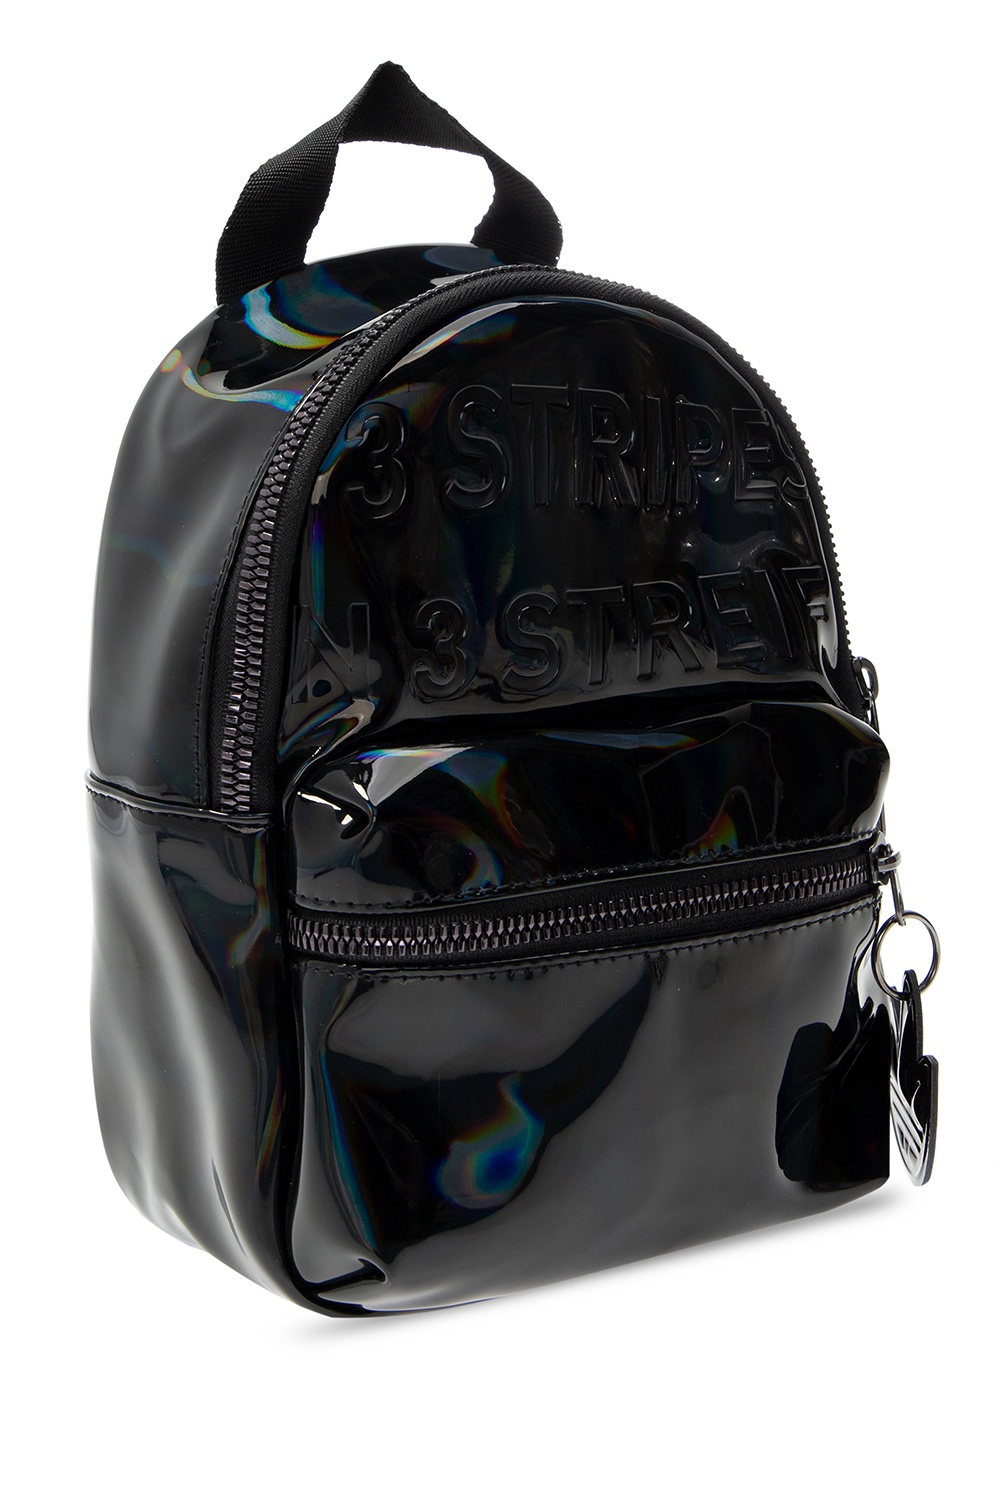 adidas backpack black friday